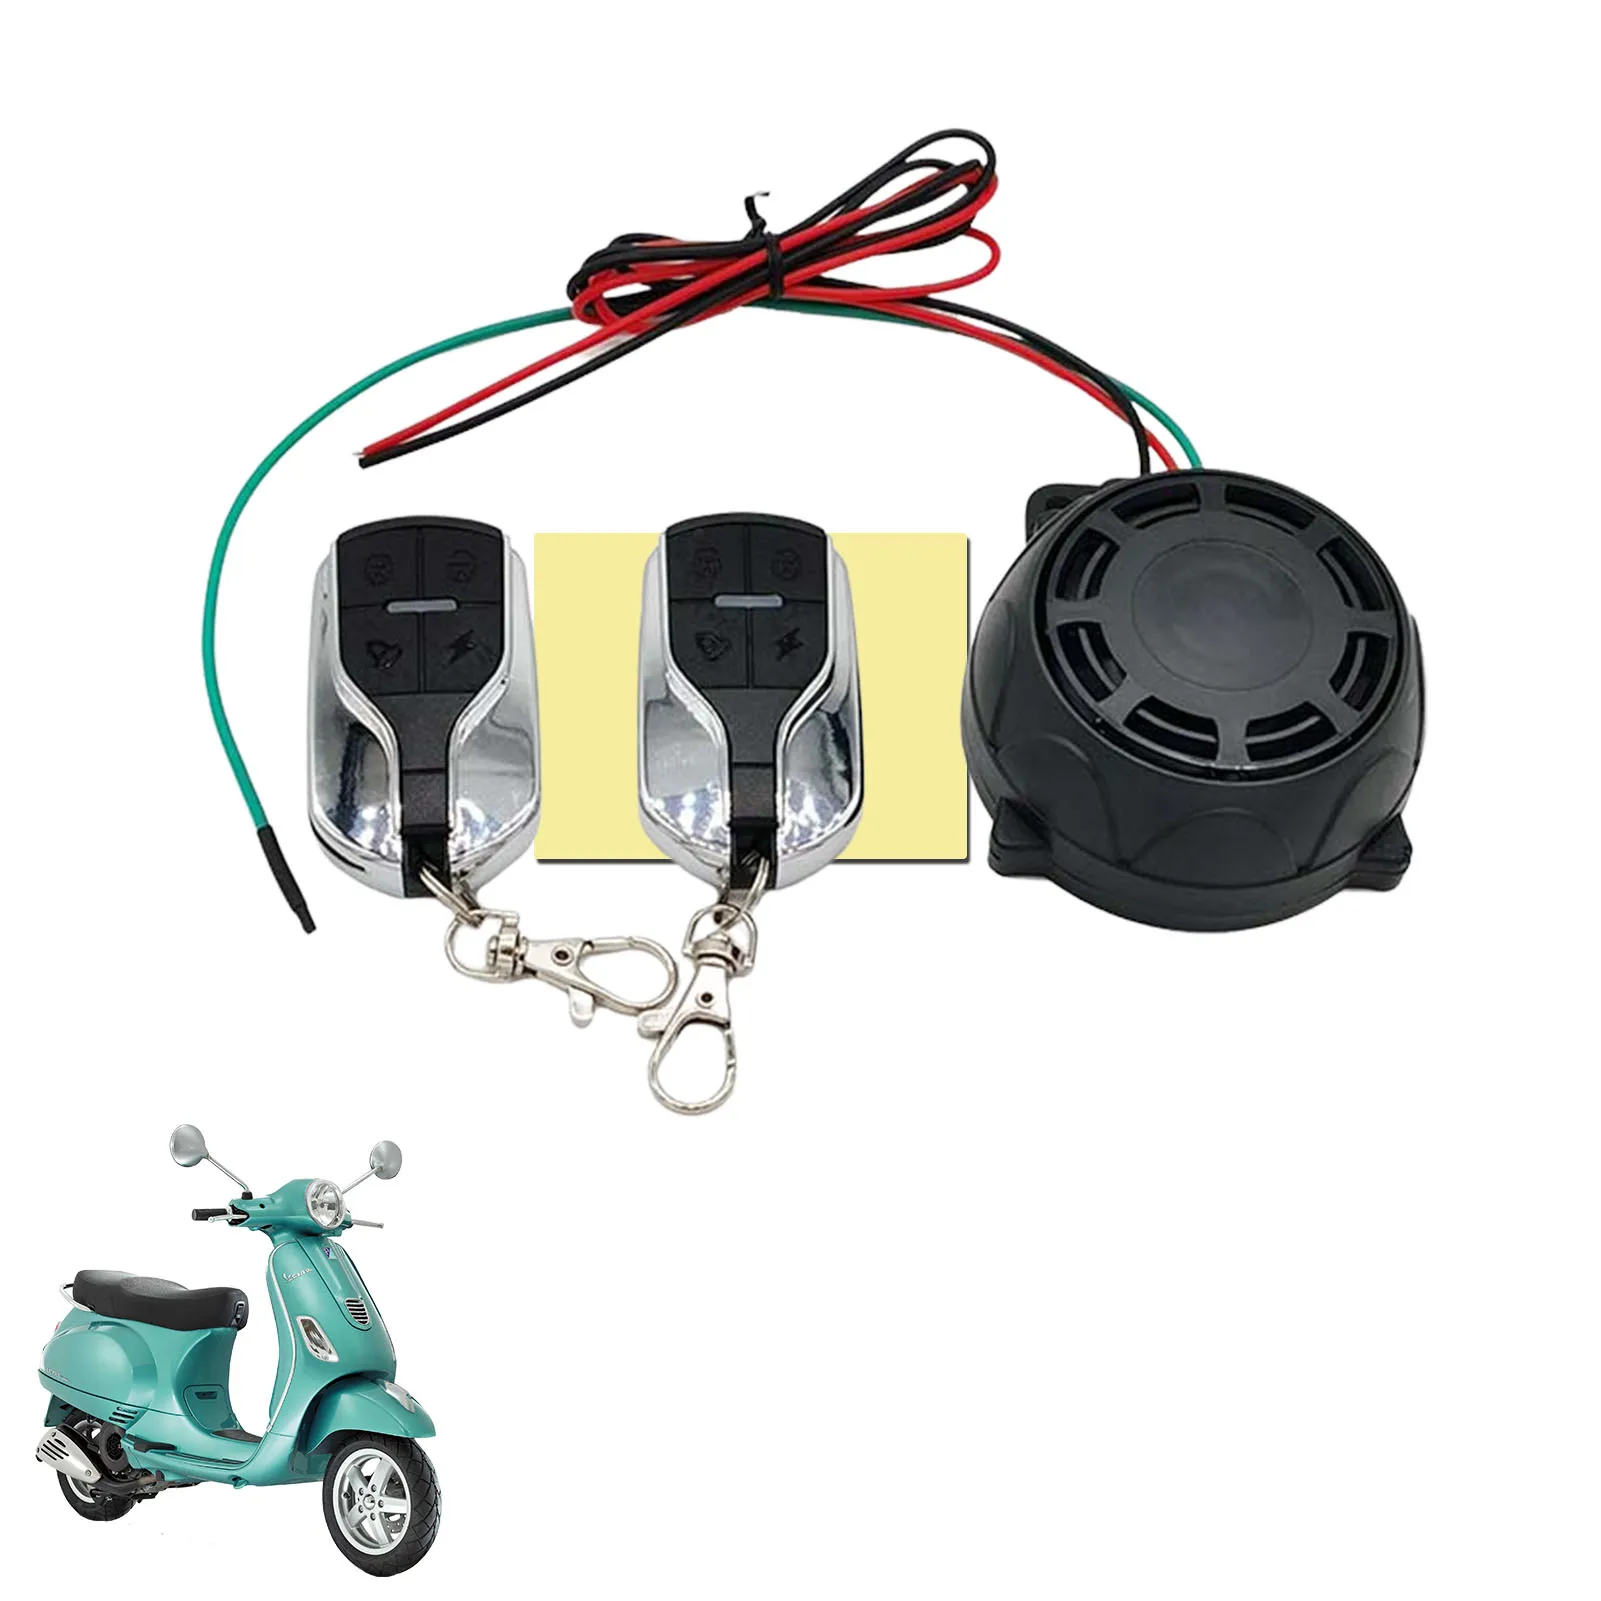 

Motorcycle Alarm System 115dB Burglar Vibration Motorcycle Bicycle Alarm Security System Wireless Vibration Motion Sensor Remote